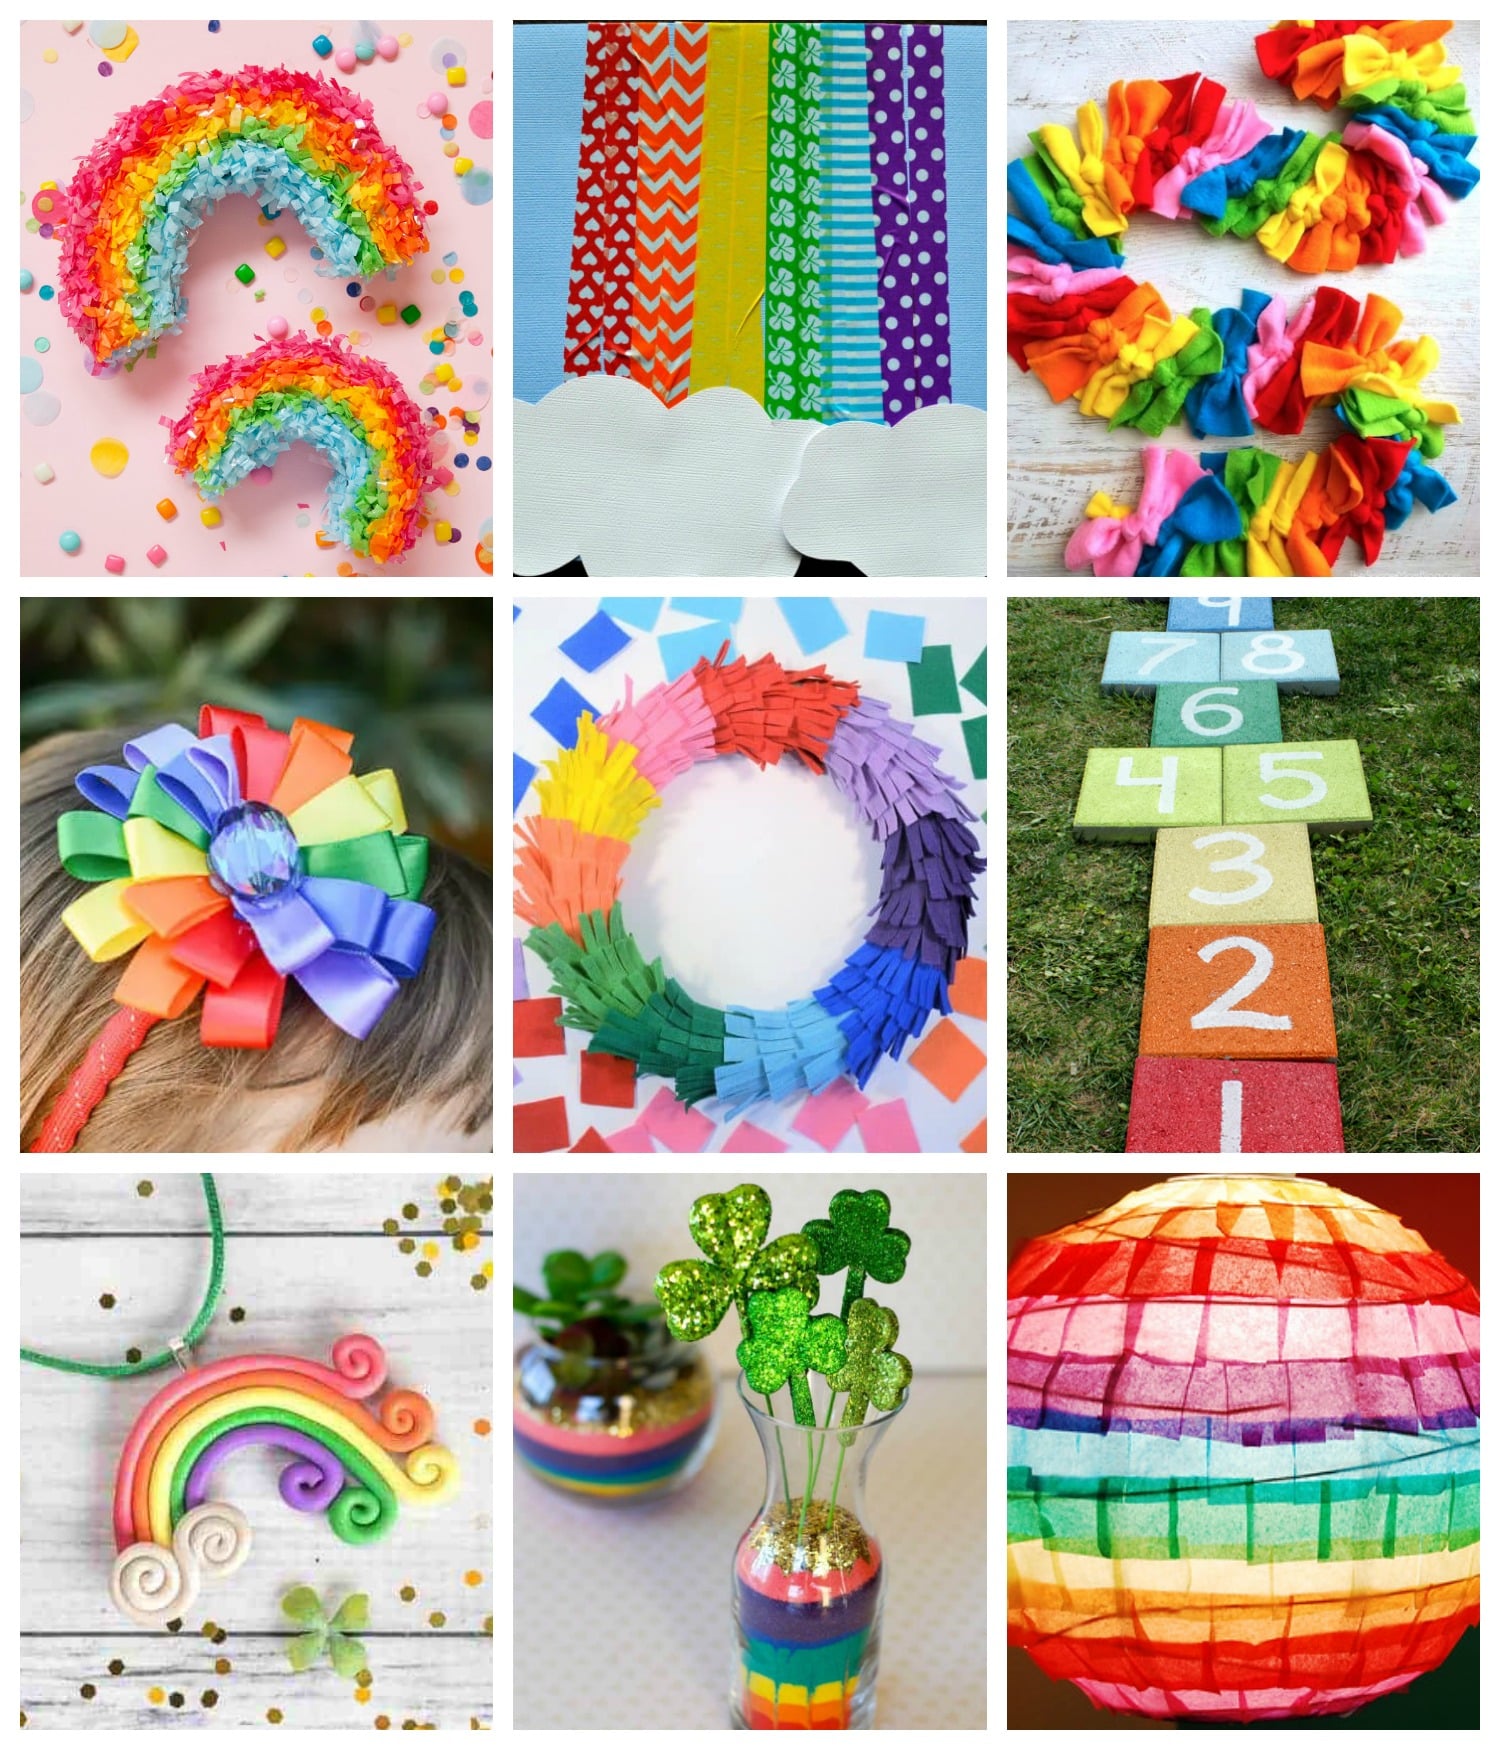 Collage of rainbow art crafts